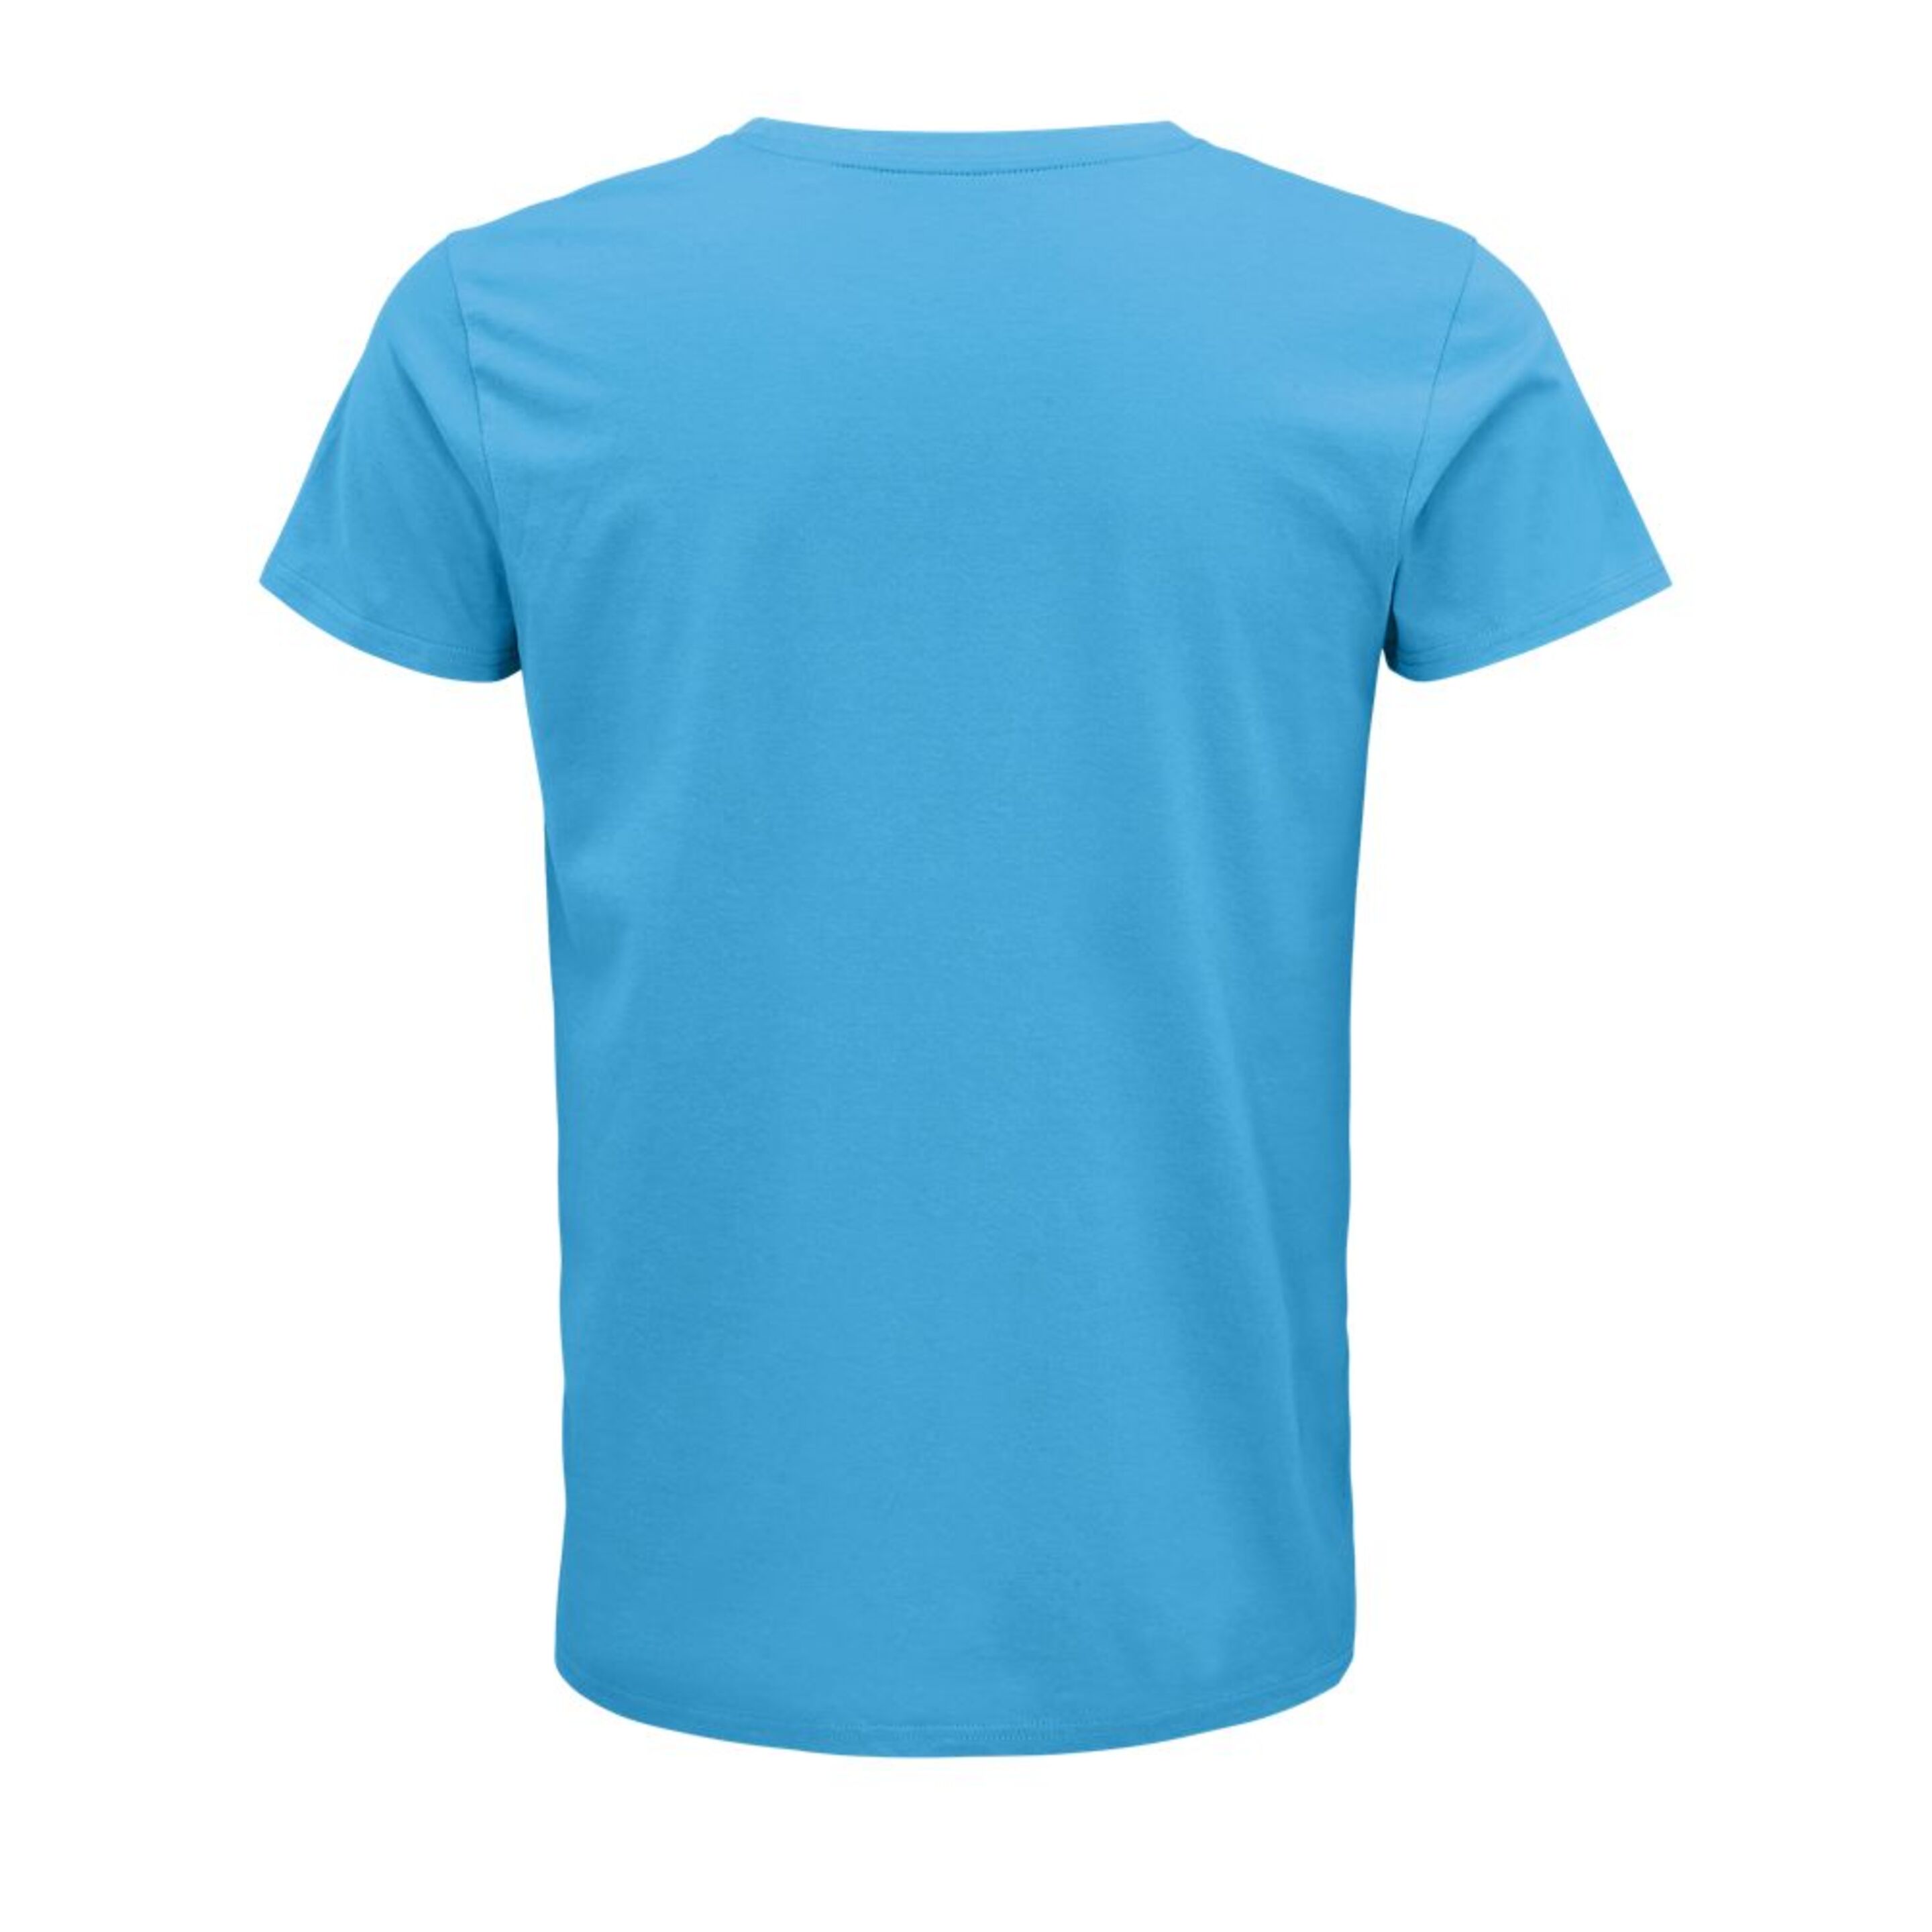 Camiseta Marnaula Crusader - Azul Claro - Modelo Adulto  MKP